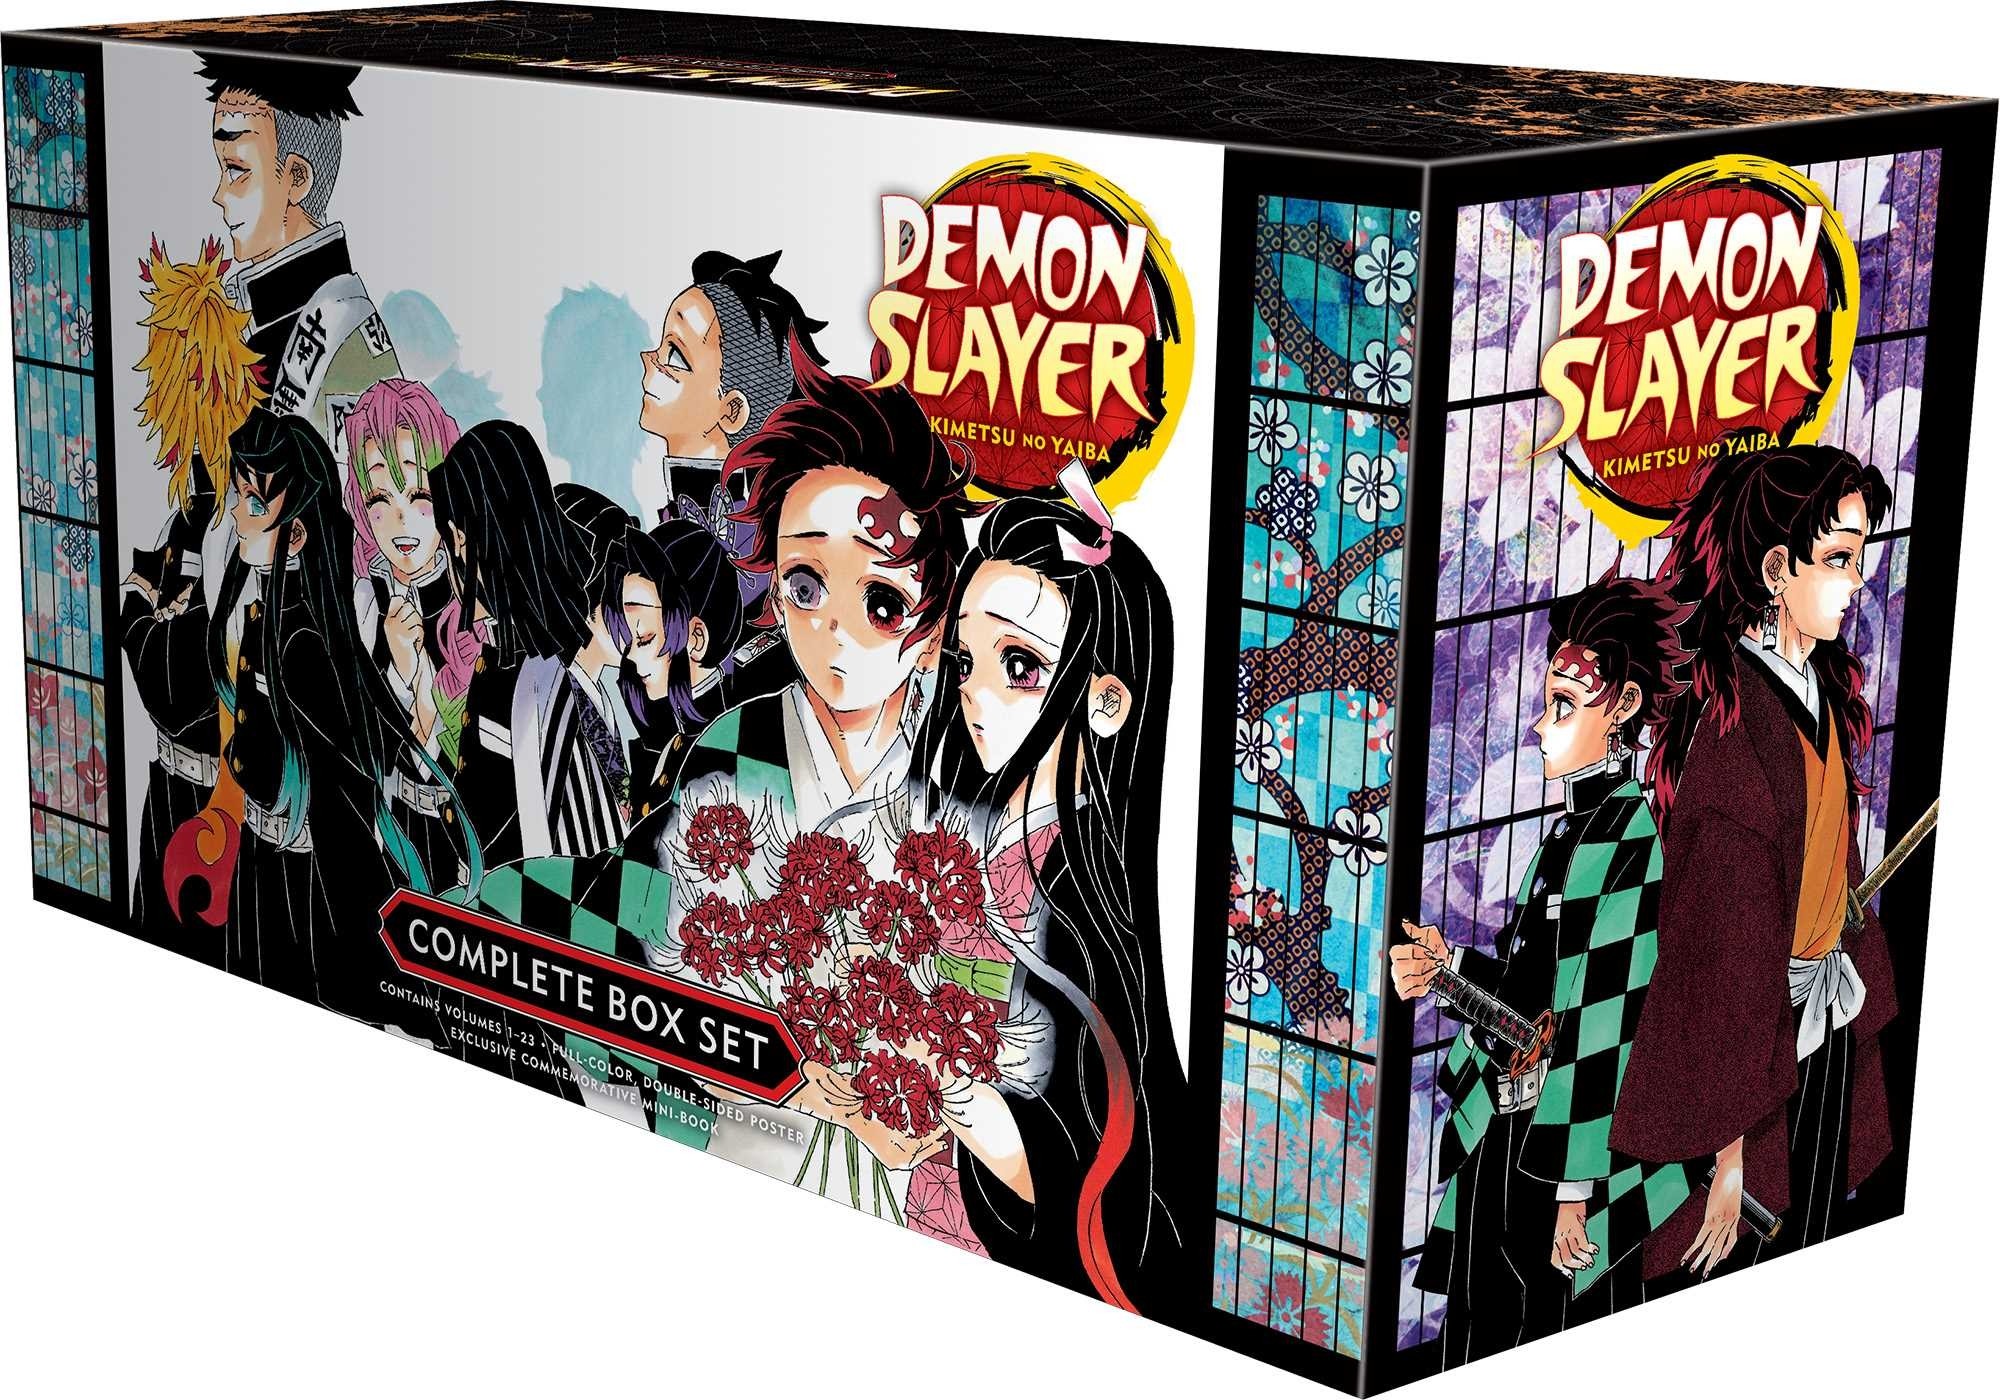 Box Demon Slayer Vols. 1 Ao 23 - Origami Importadora